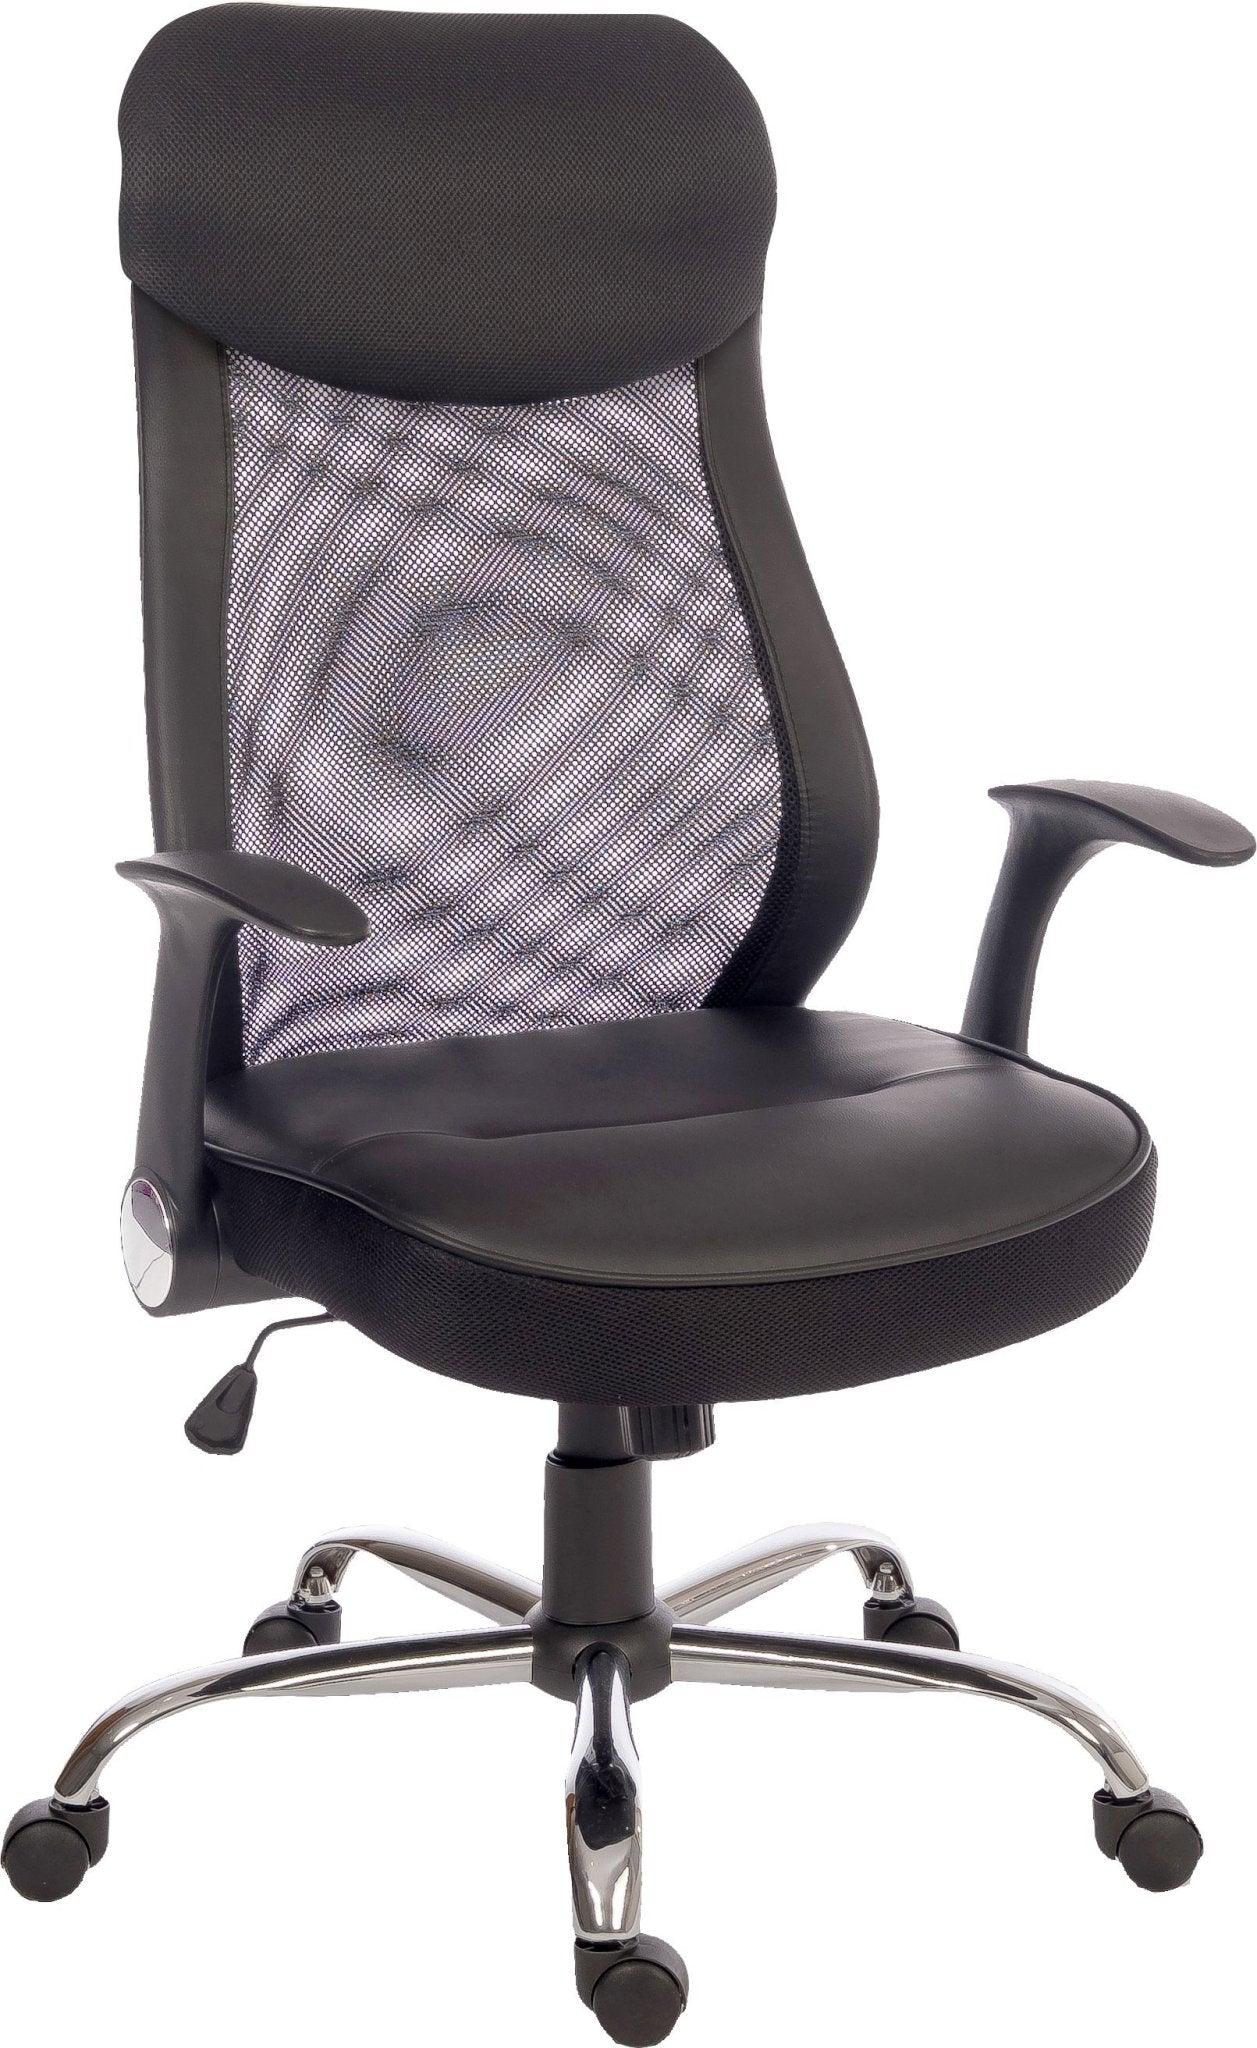 Curve mesh office chair - crimblefest furniture - image 1